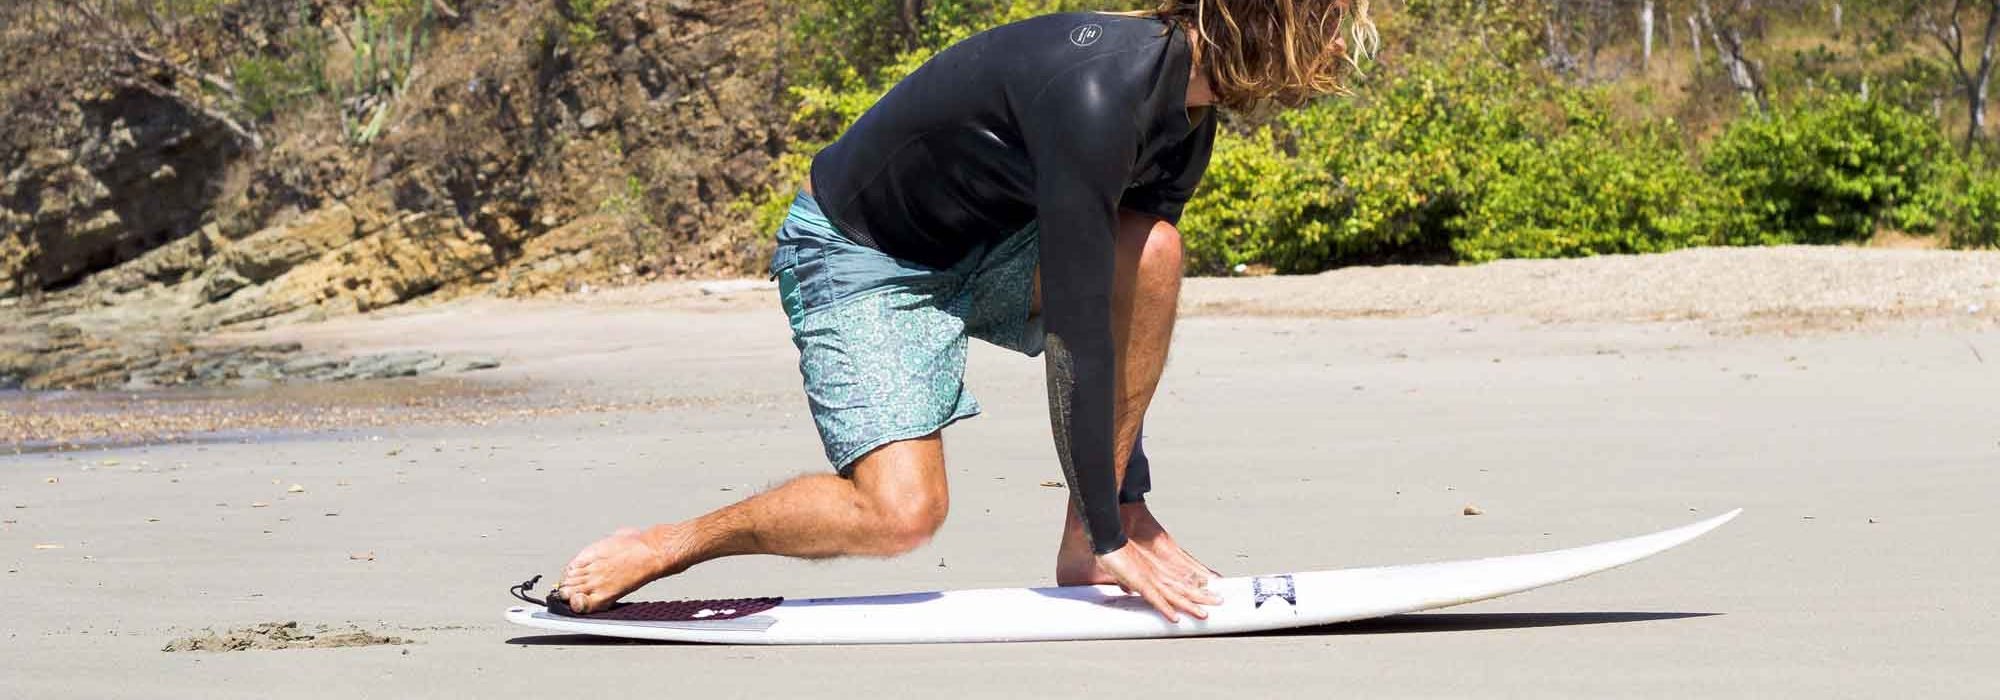 Front Foot Between Hands on the Surfboard